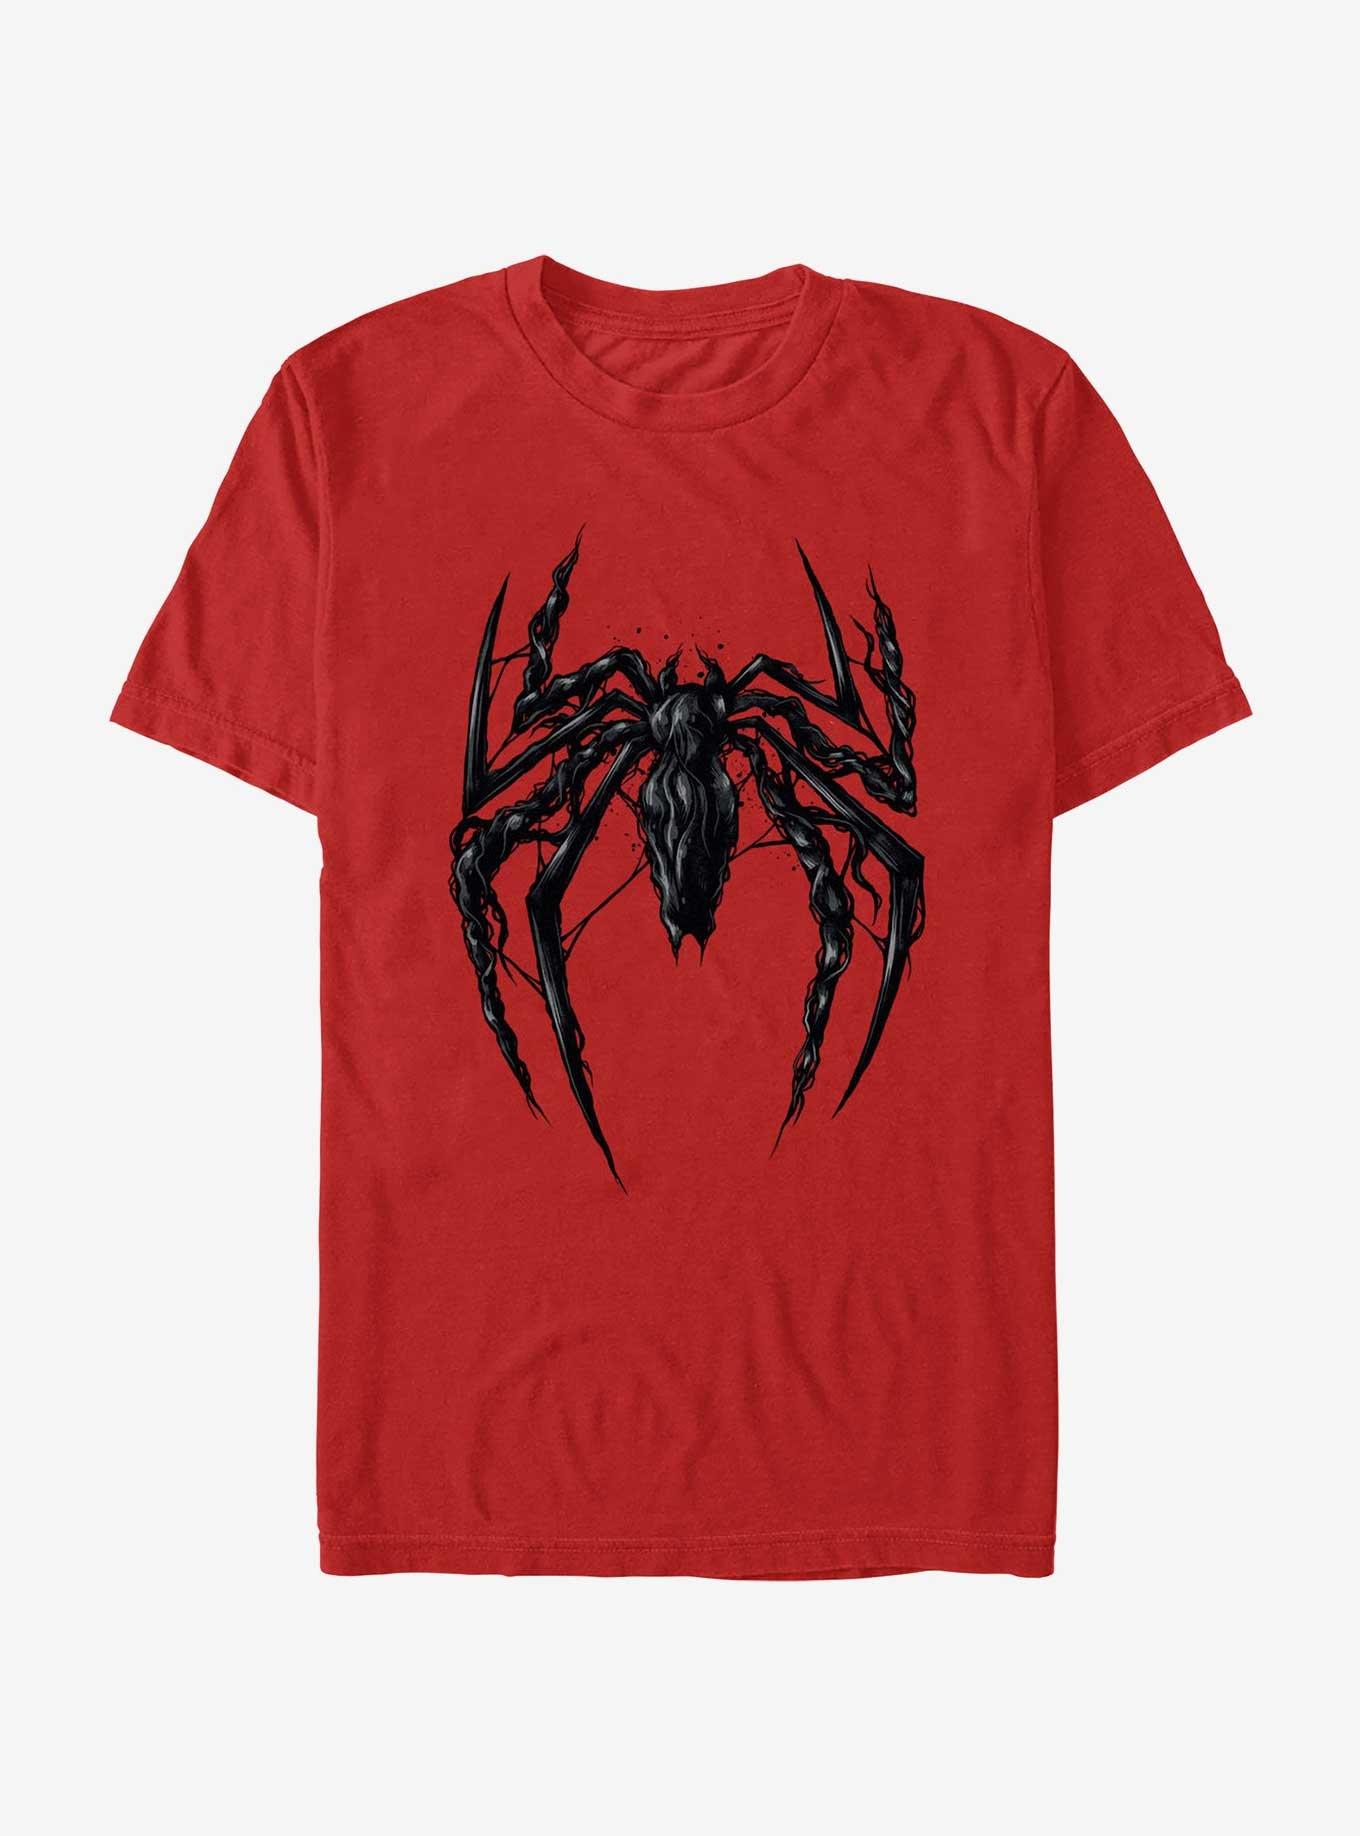 Marvel Spider-Man 2 Game Black Spider Venom Icon T-Shirt, RED, hi-res